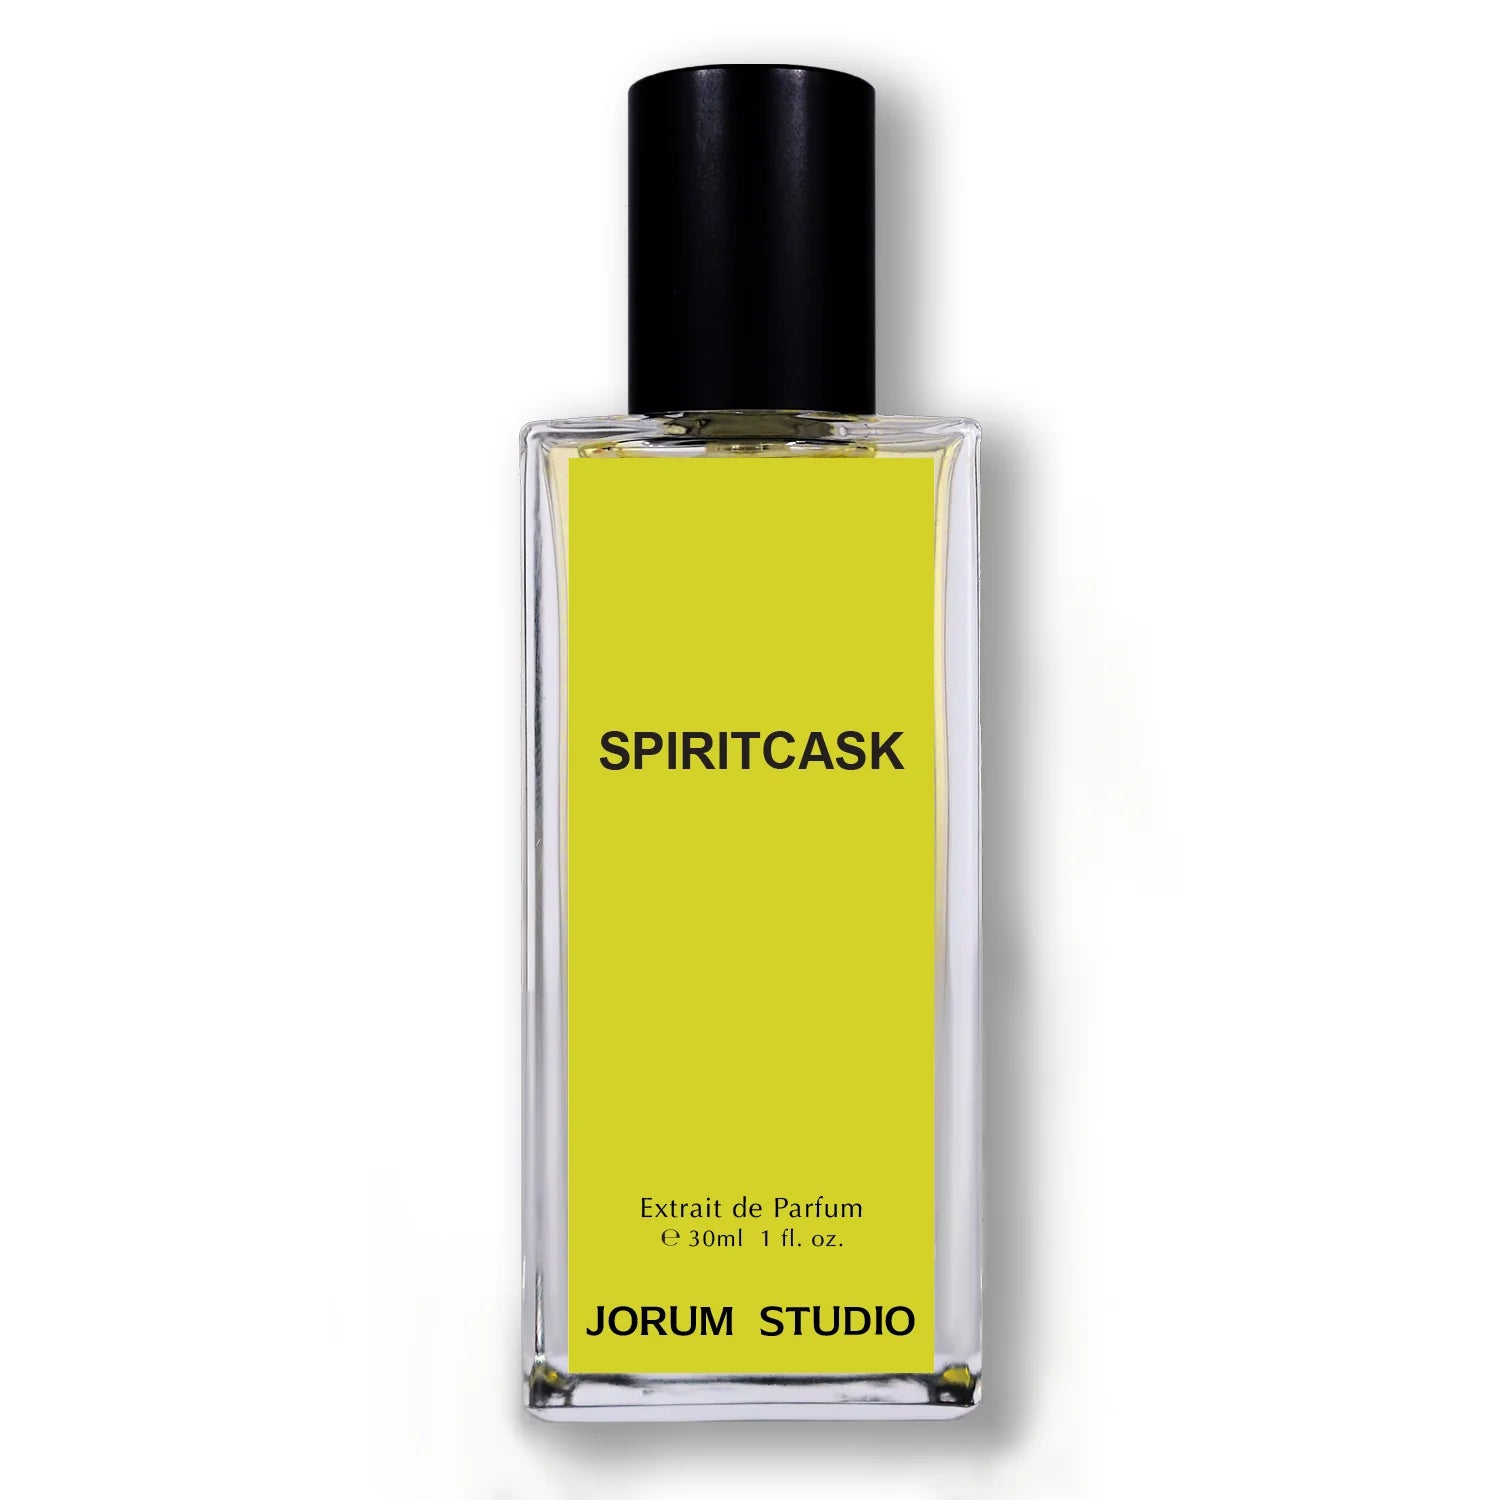 Jorum Studio Spiritcask Extrait de Parfum 30ml